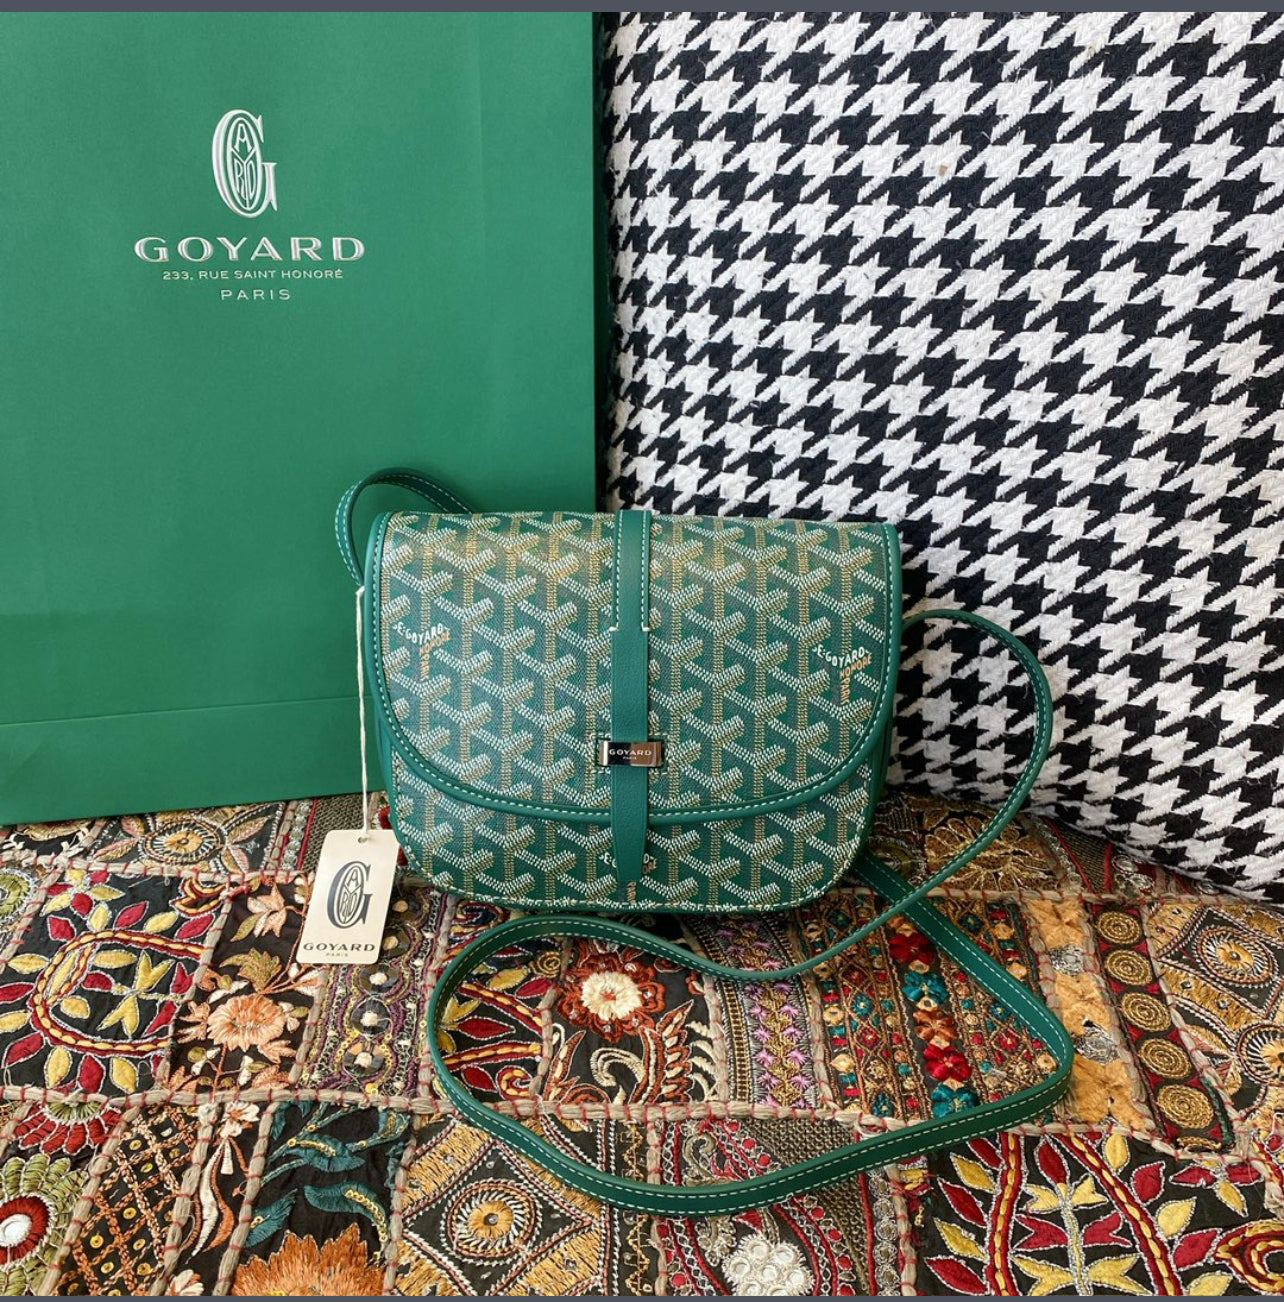 Sac Belvédère Goyard green leather facture – Ringo shopping